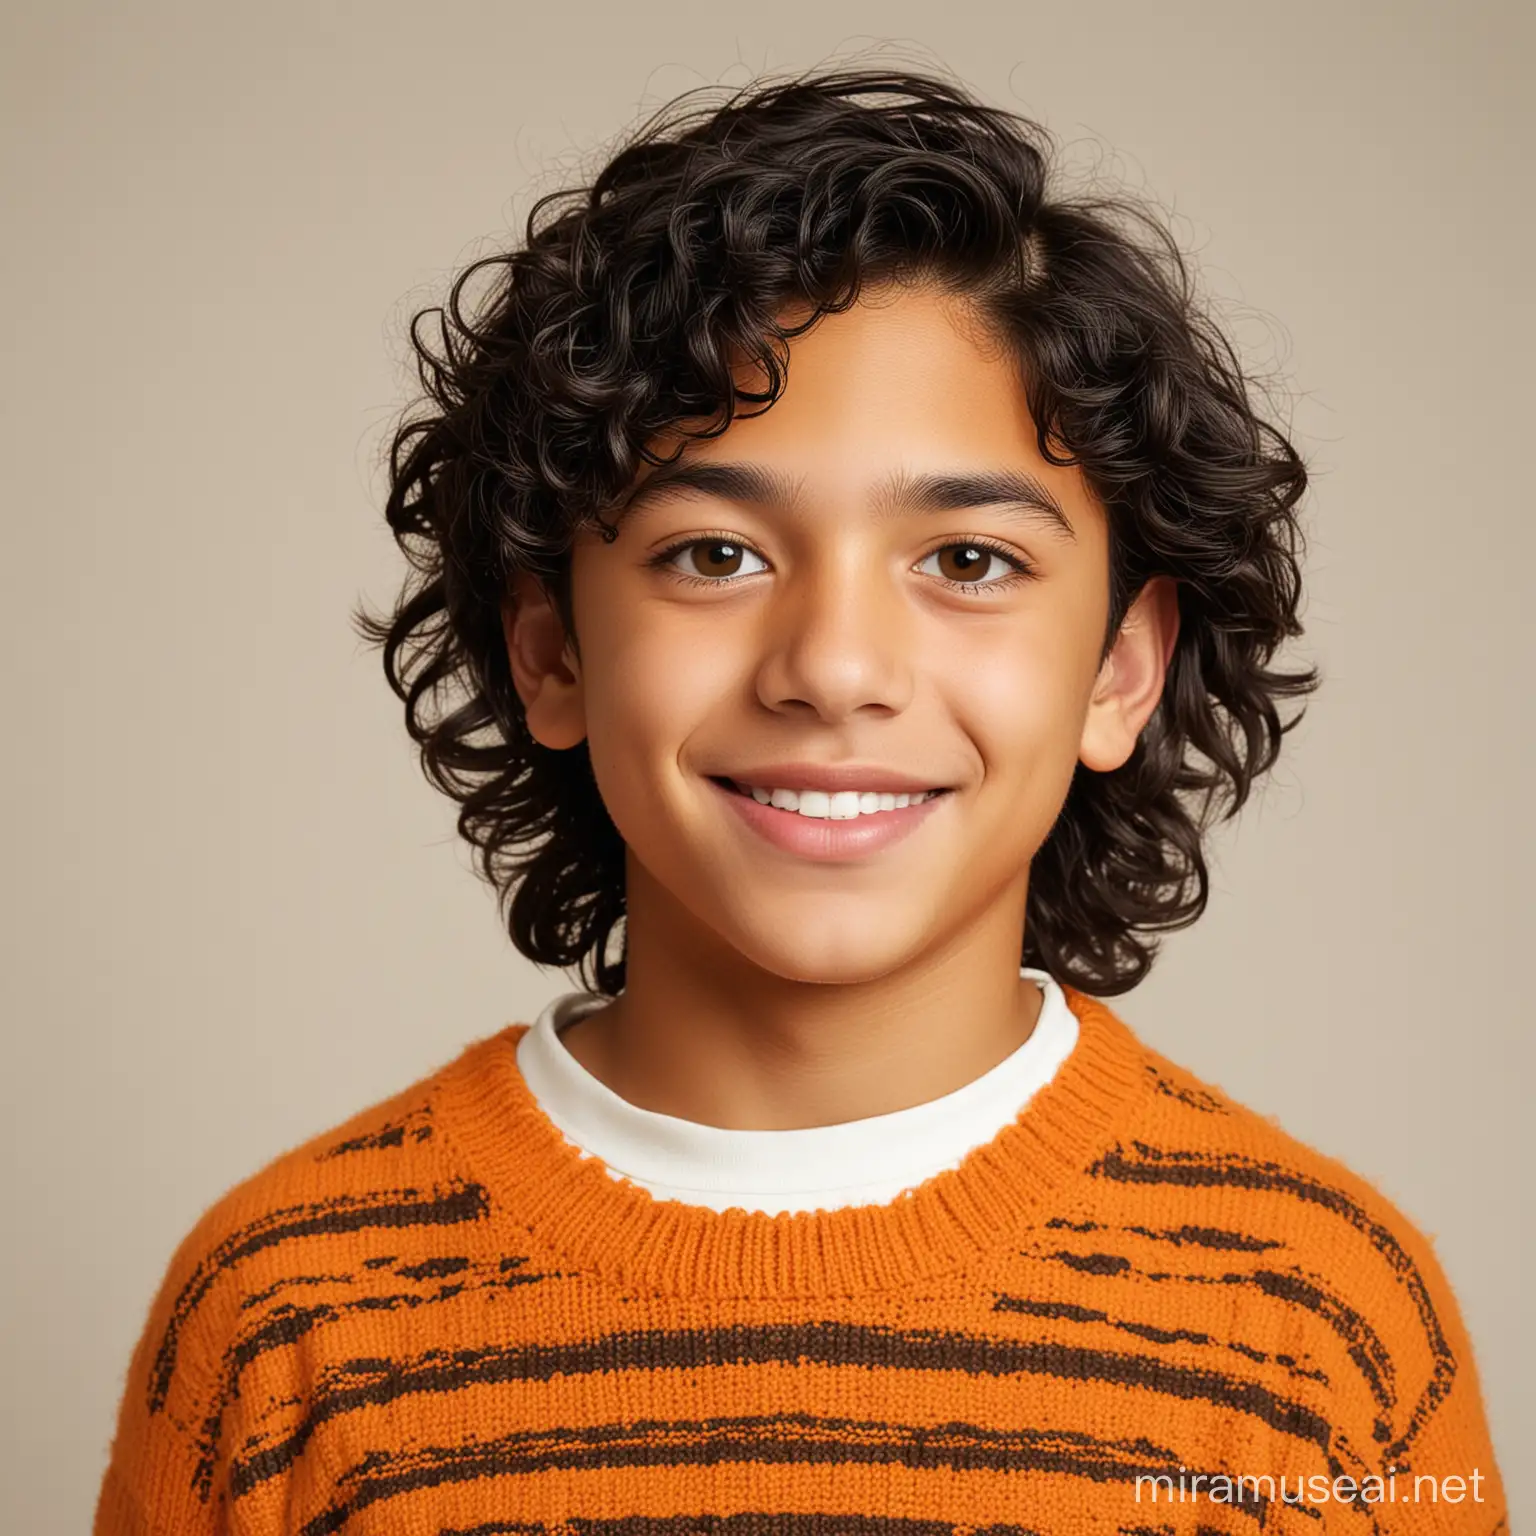 Hawaiian Teenage Boy in Orange Sweater on White Background